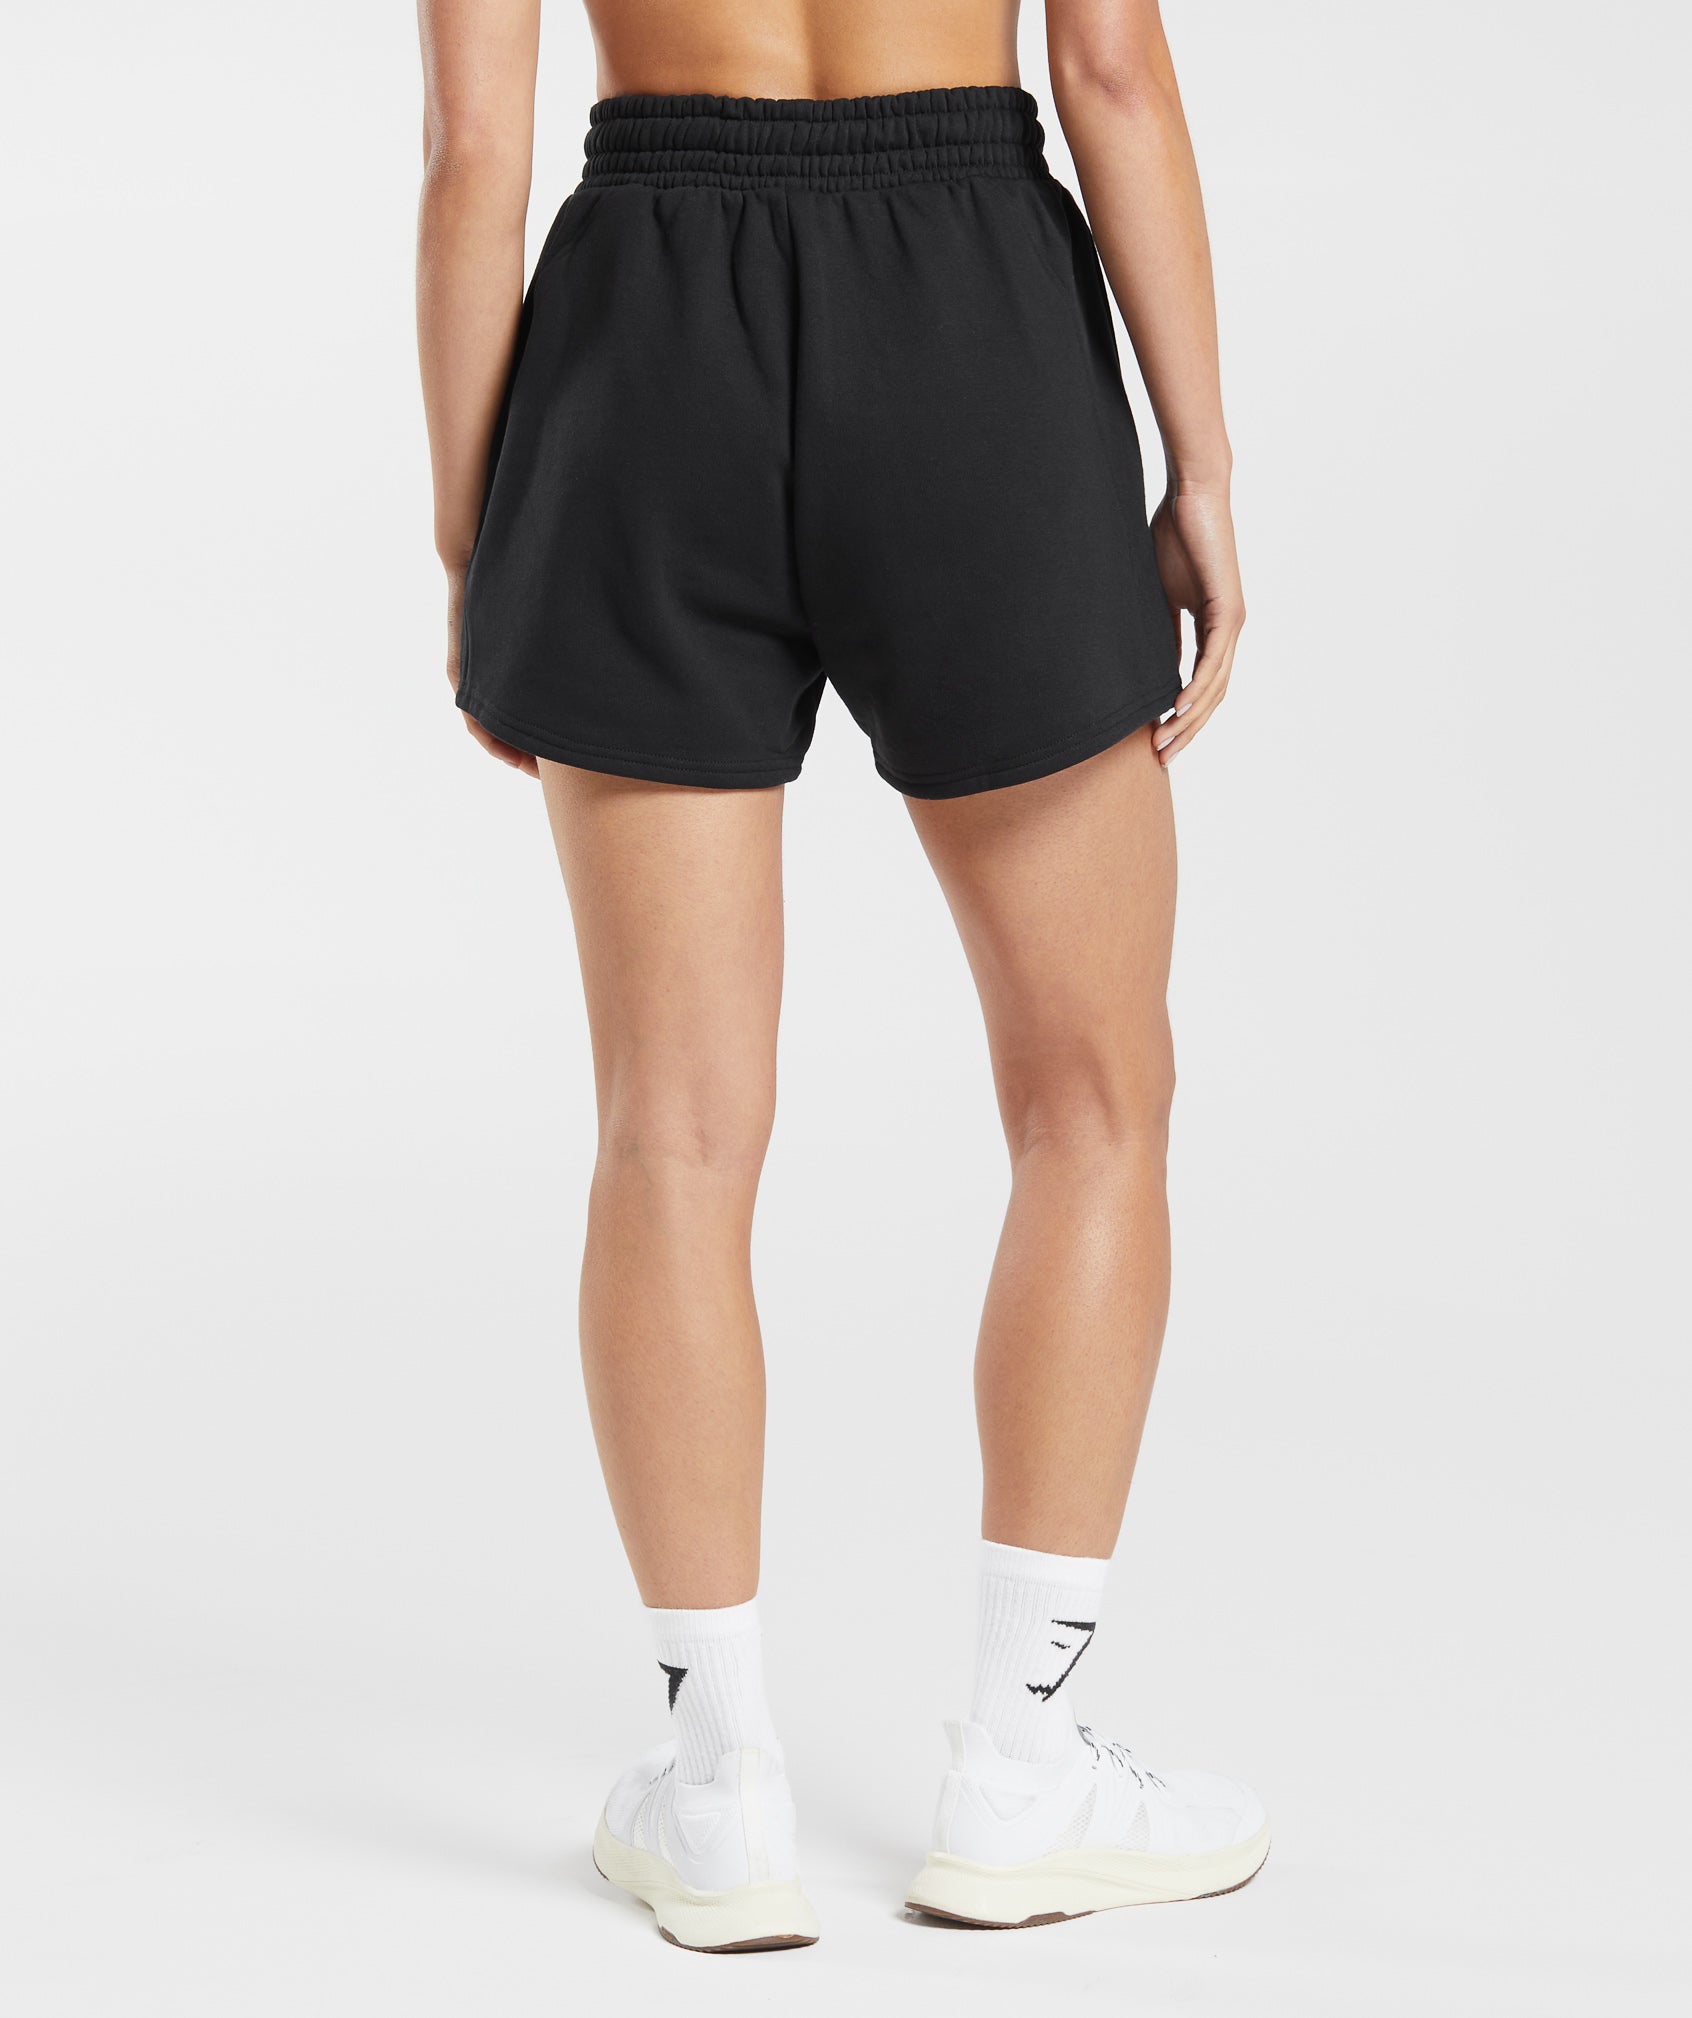 Pantaloncini donna shorts sport fluo fitness elastici hot pant